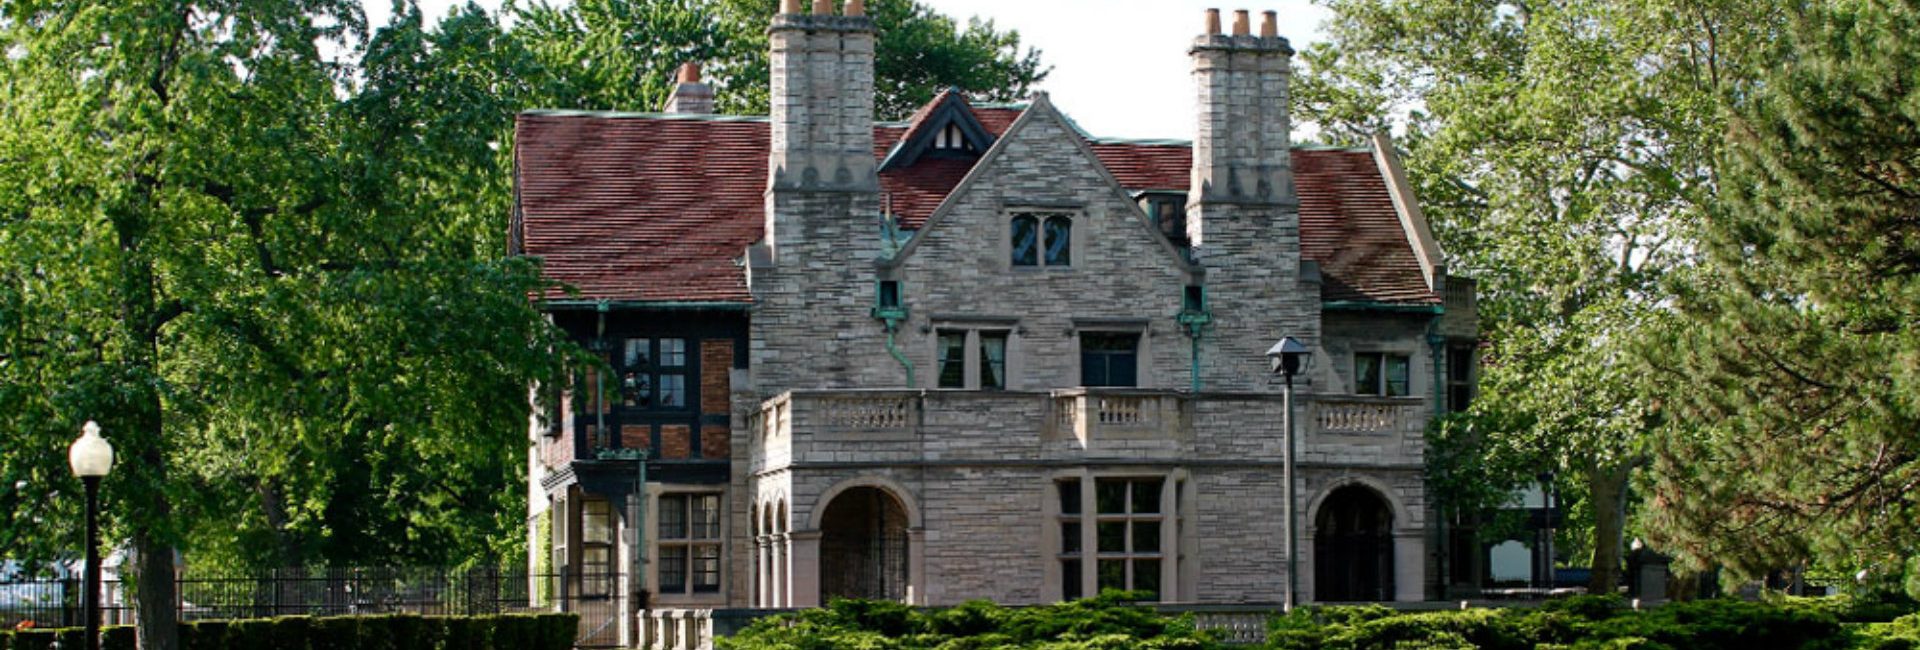 Willistead Manor in Windsor, Ontario. (Photo courtesty of Tourism Windsor-Essex Pelee Island)